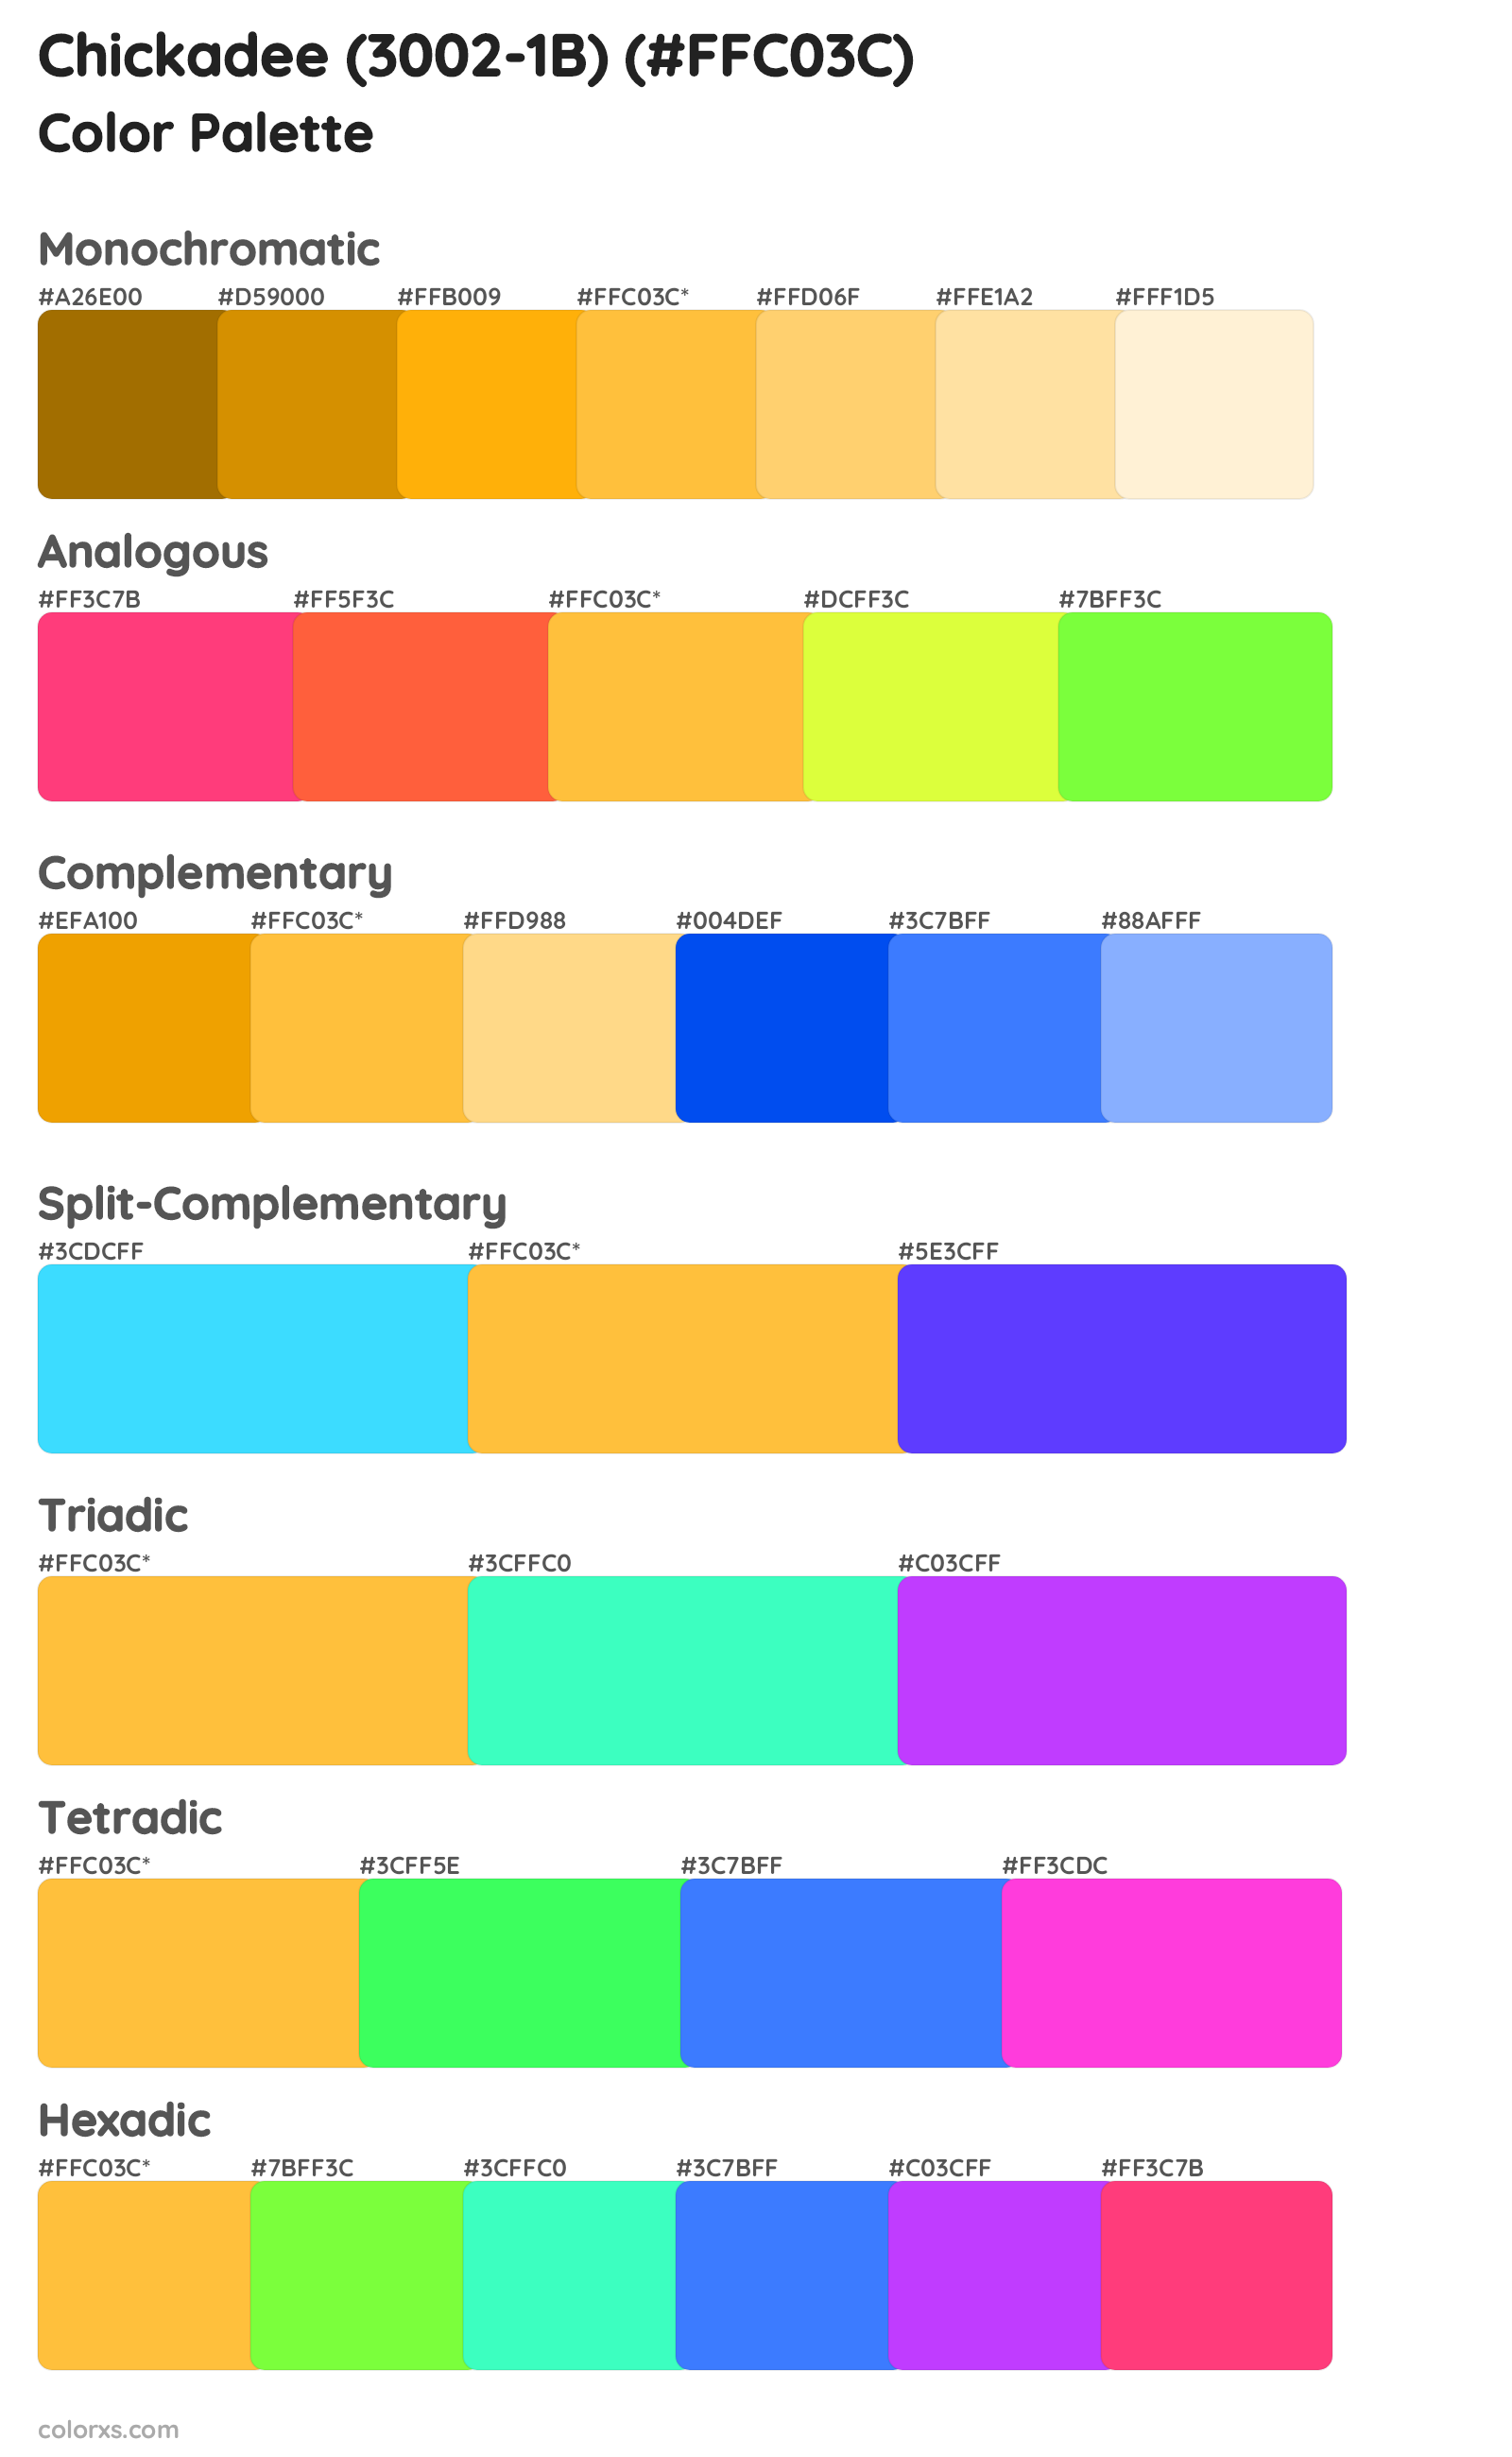 Chickadee (3002-1B) Color Scheme Palettes